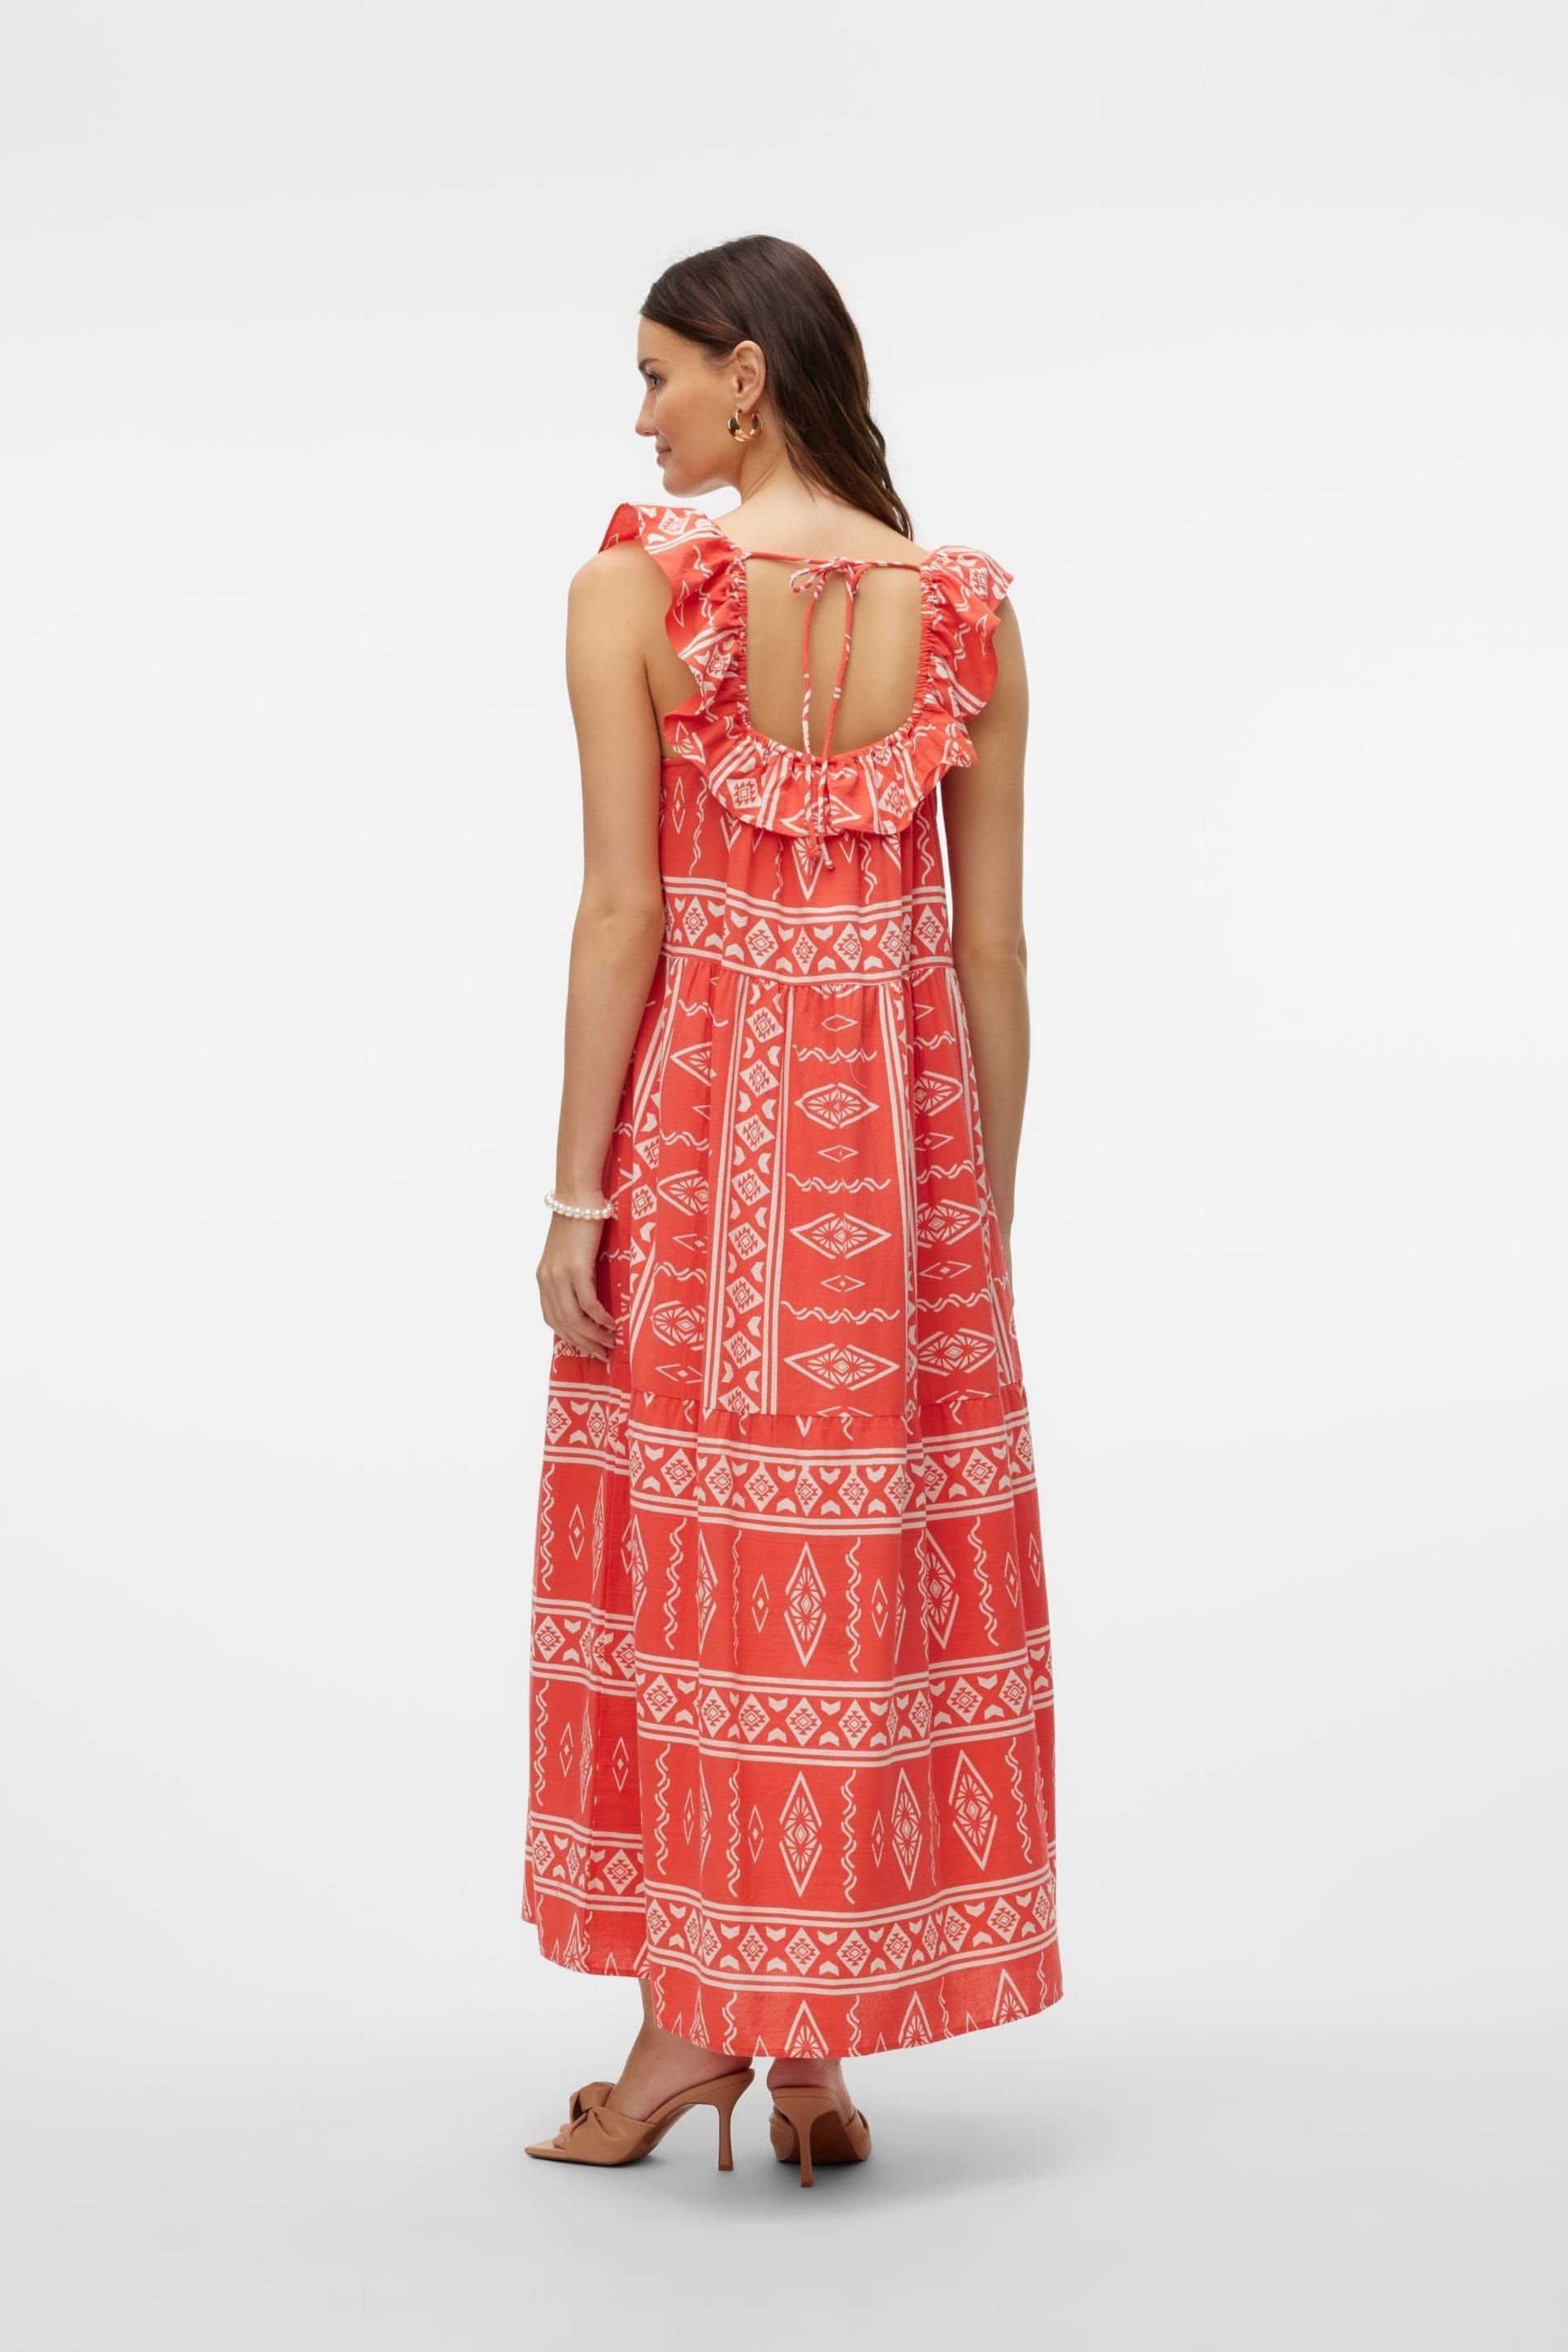 VERO MODA Pink Aztec Print Ruffle Summer Maxi Dress - Image 3 of 7